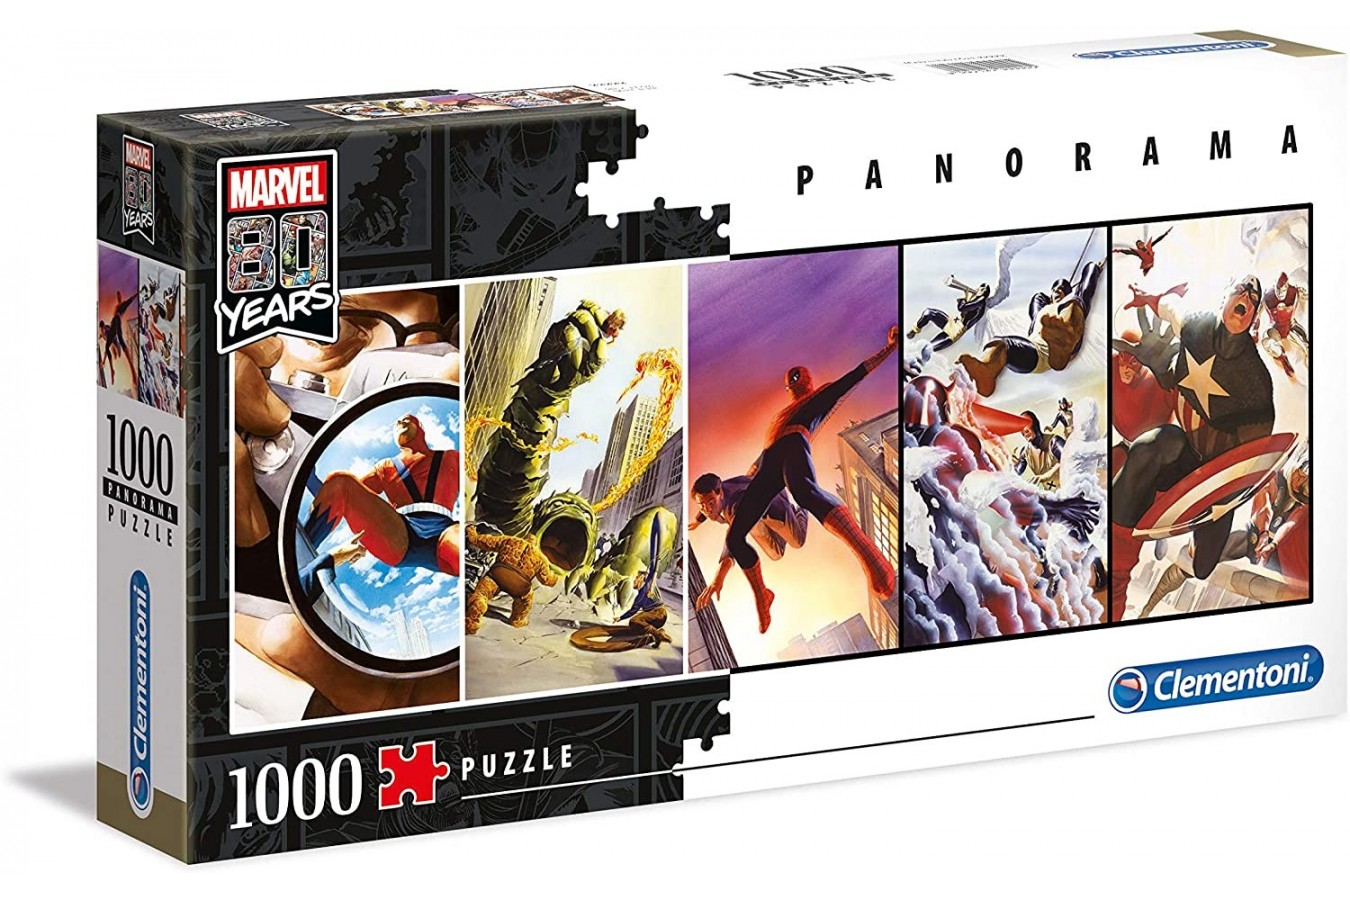 Puzzle panoramic Clementoni - Marvel 80 Years, 1000 piese (39546)